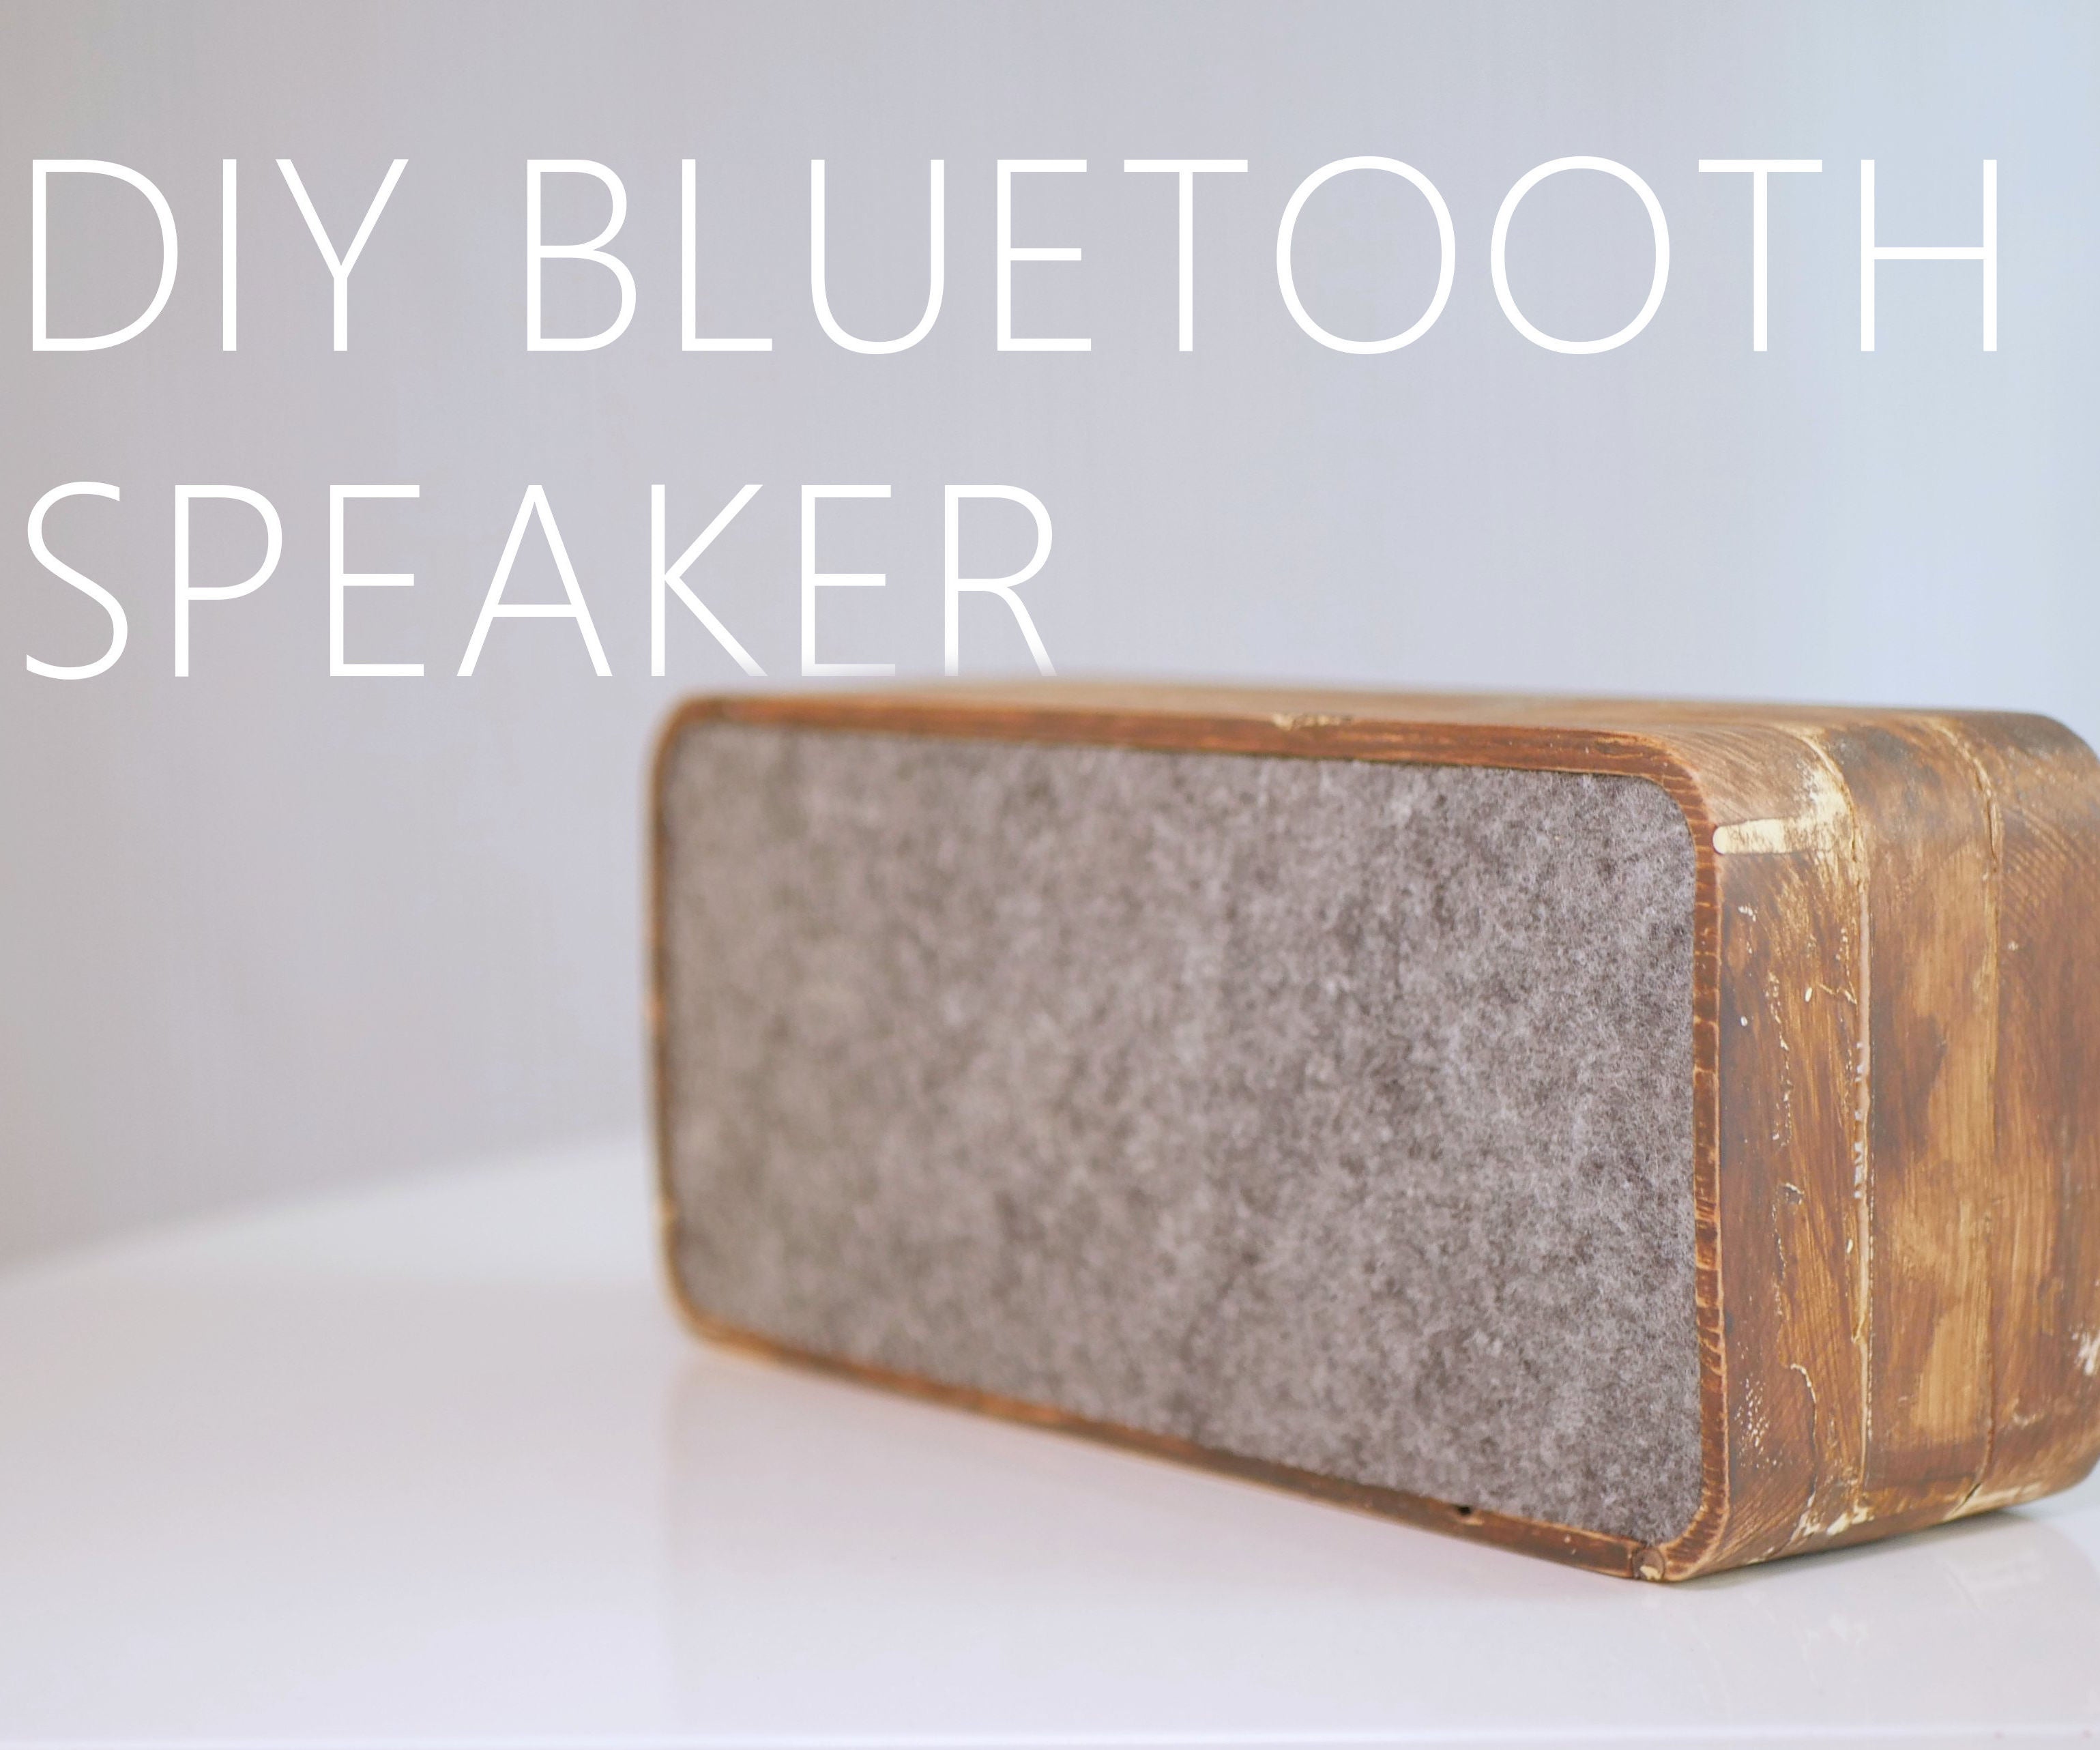 DIY Wooden Bluetooth Speaker